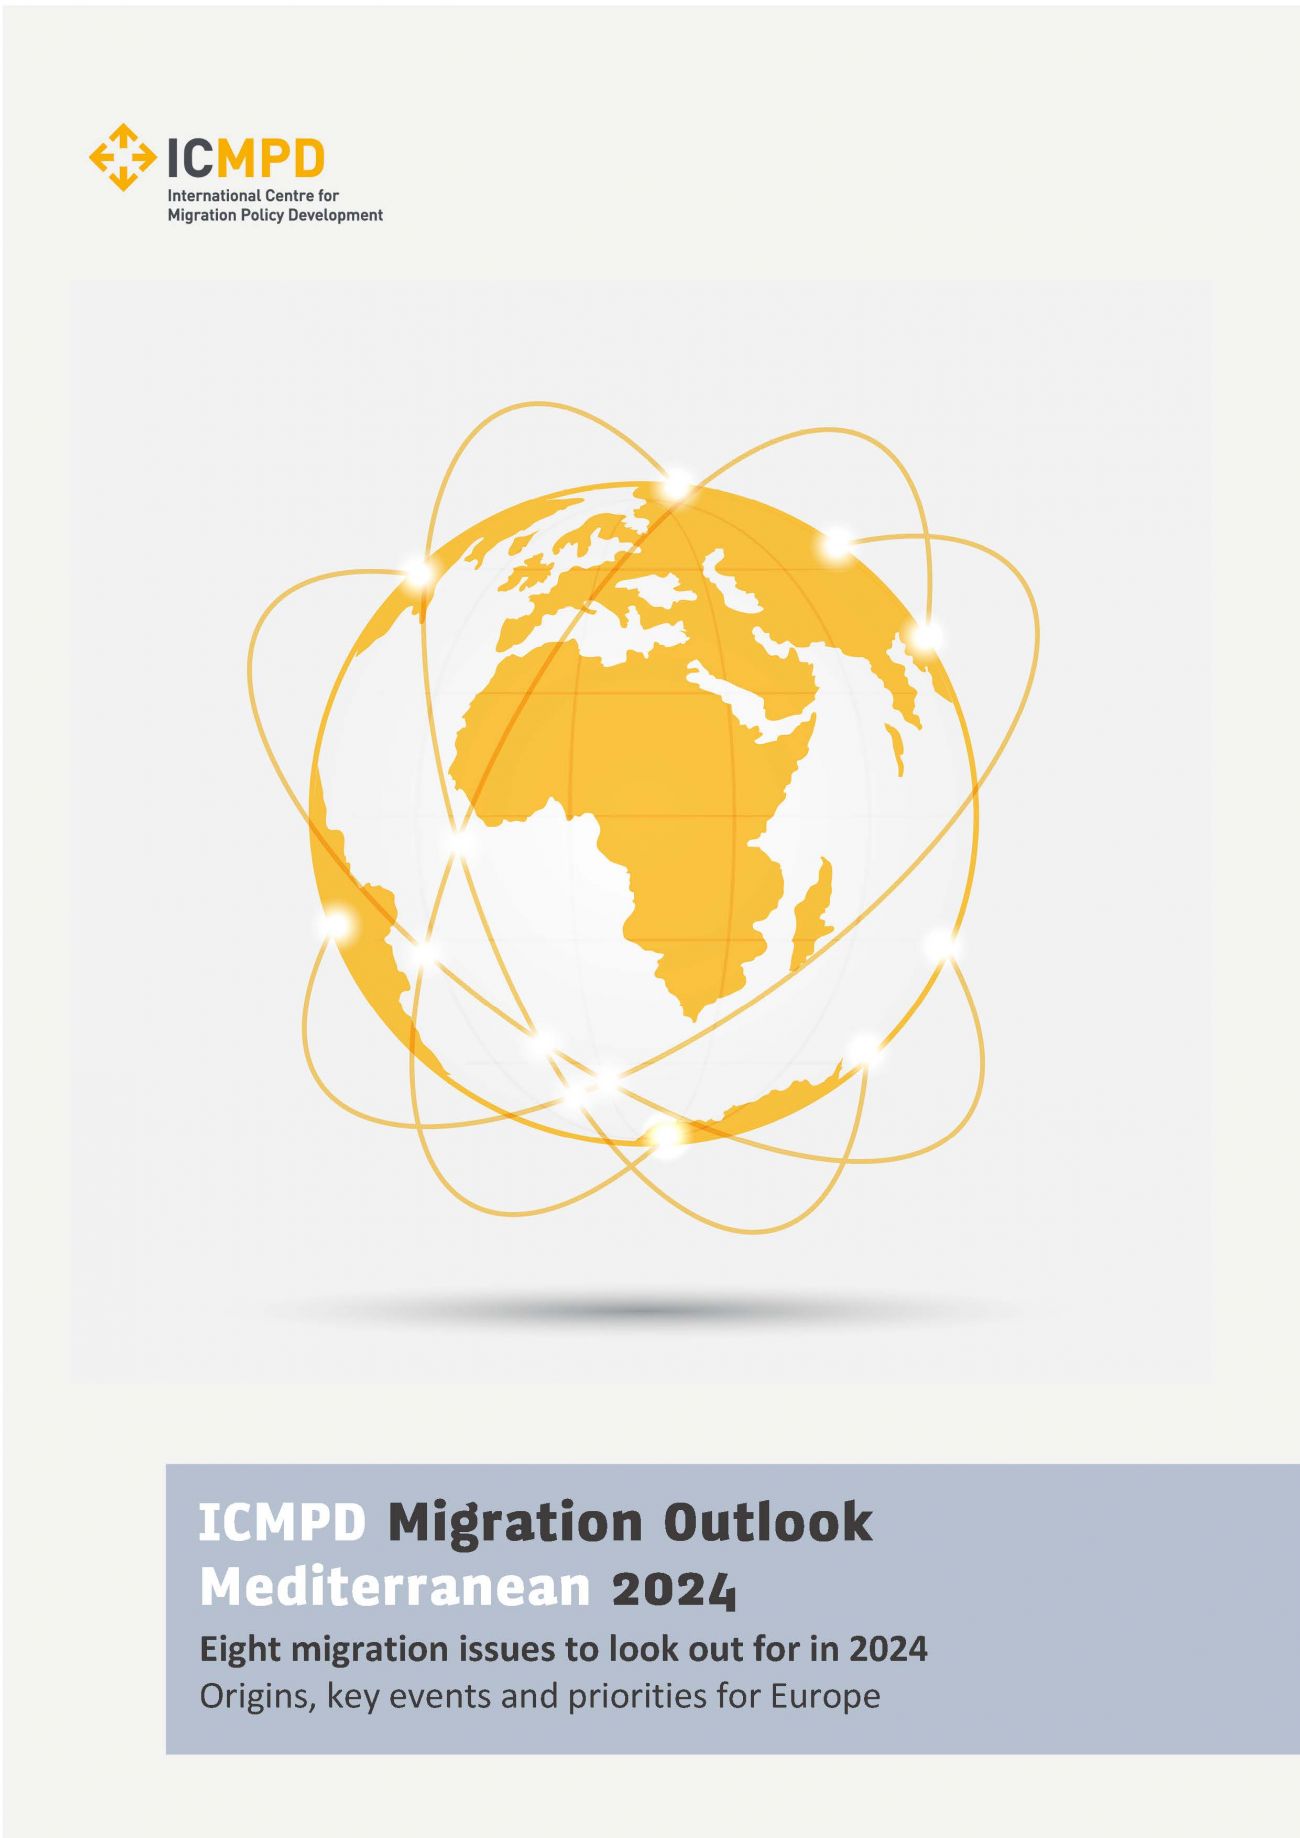 ICMPD_Mediterranean_Migration Outlook 2024_Page_01.jpg